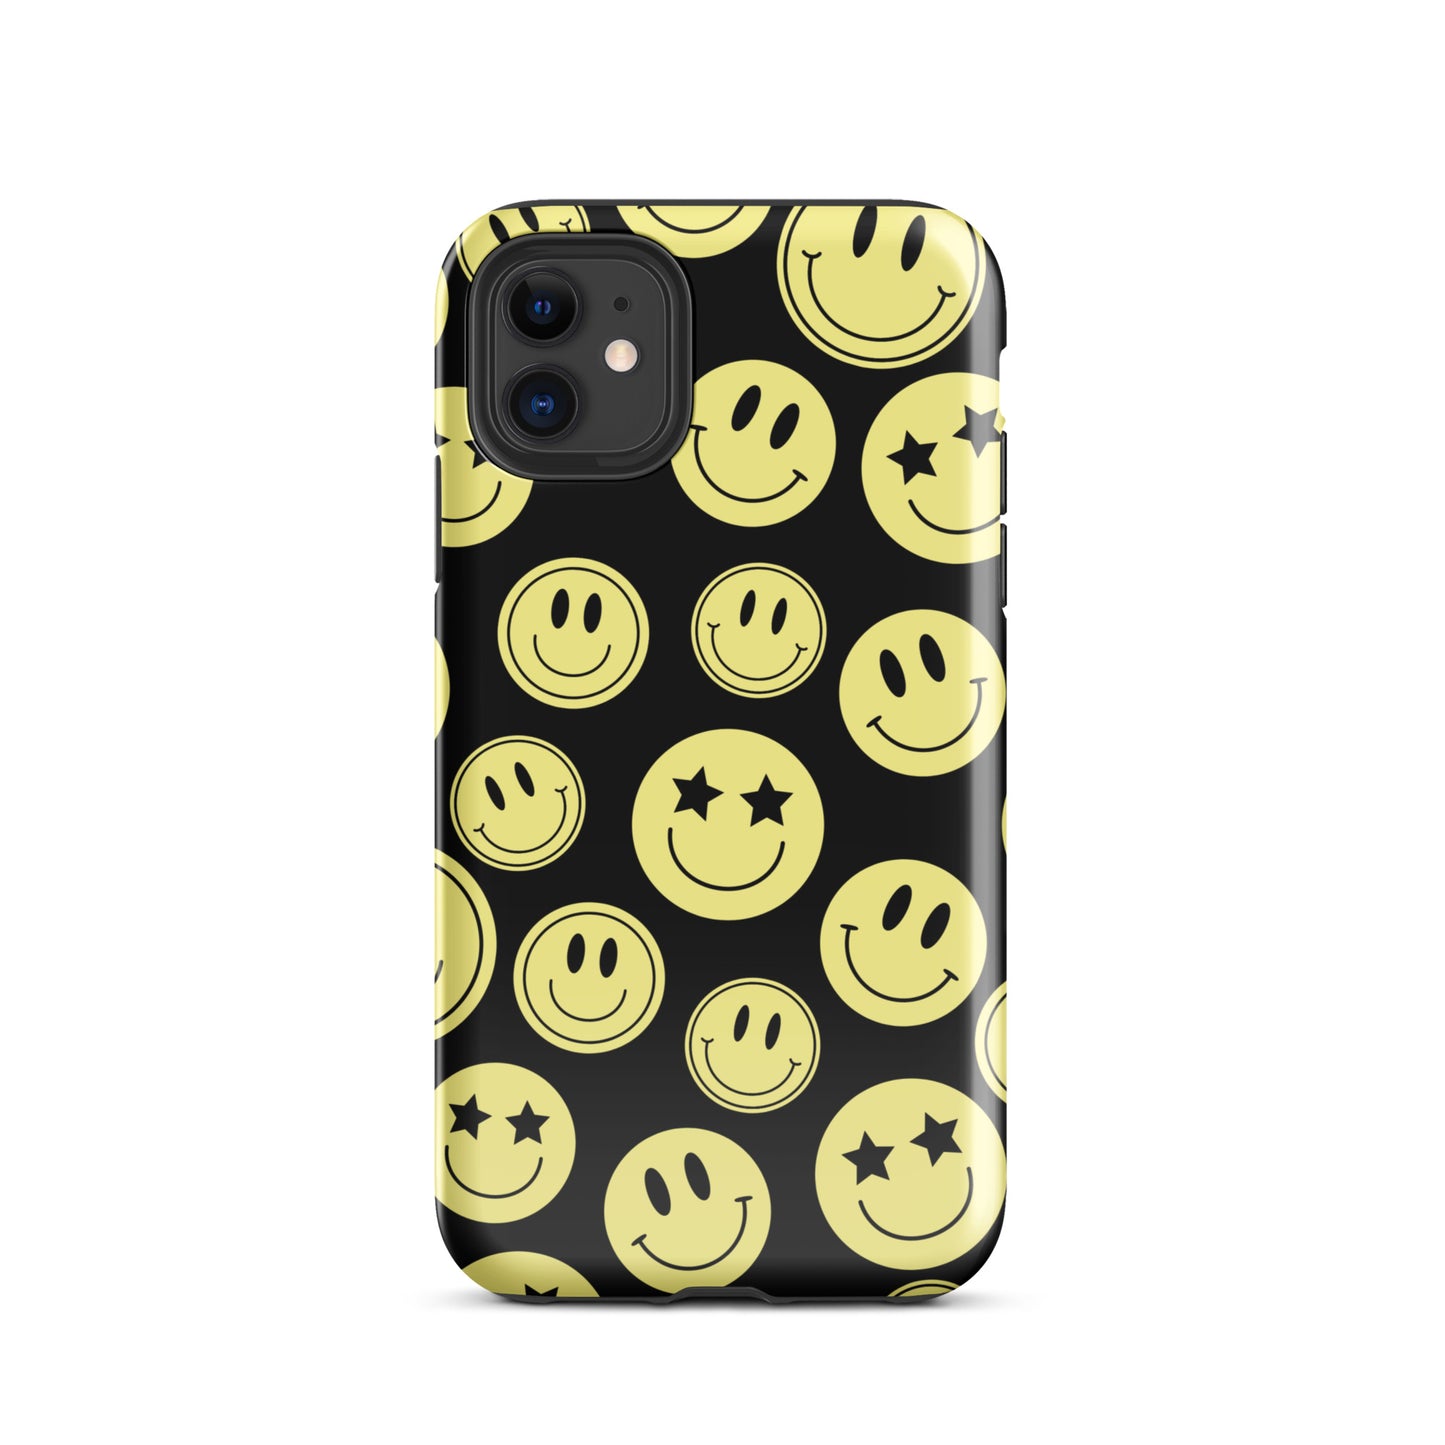 Black Smiley Faces iPhone Case